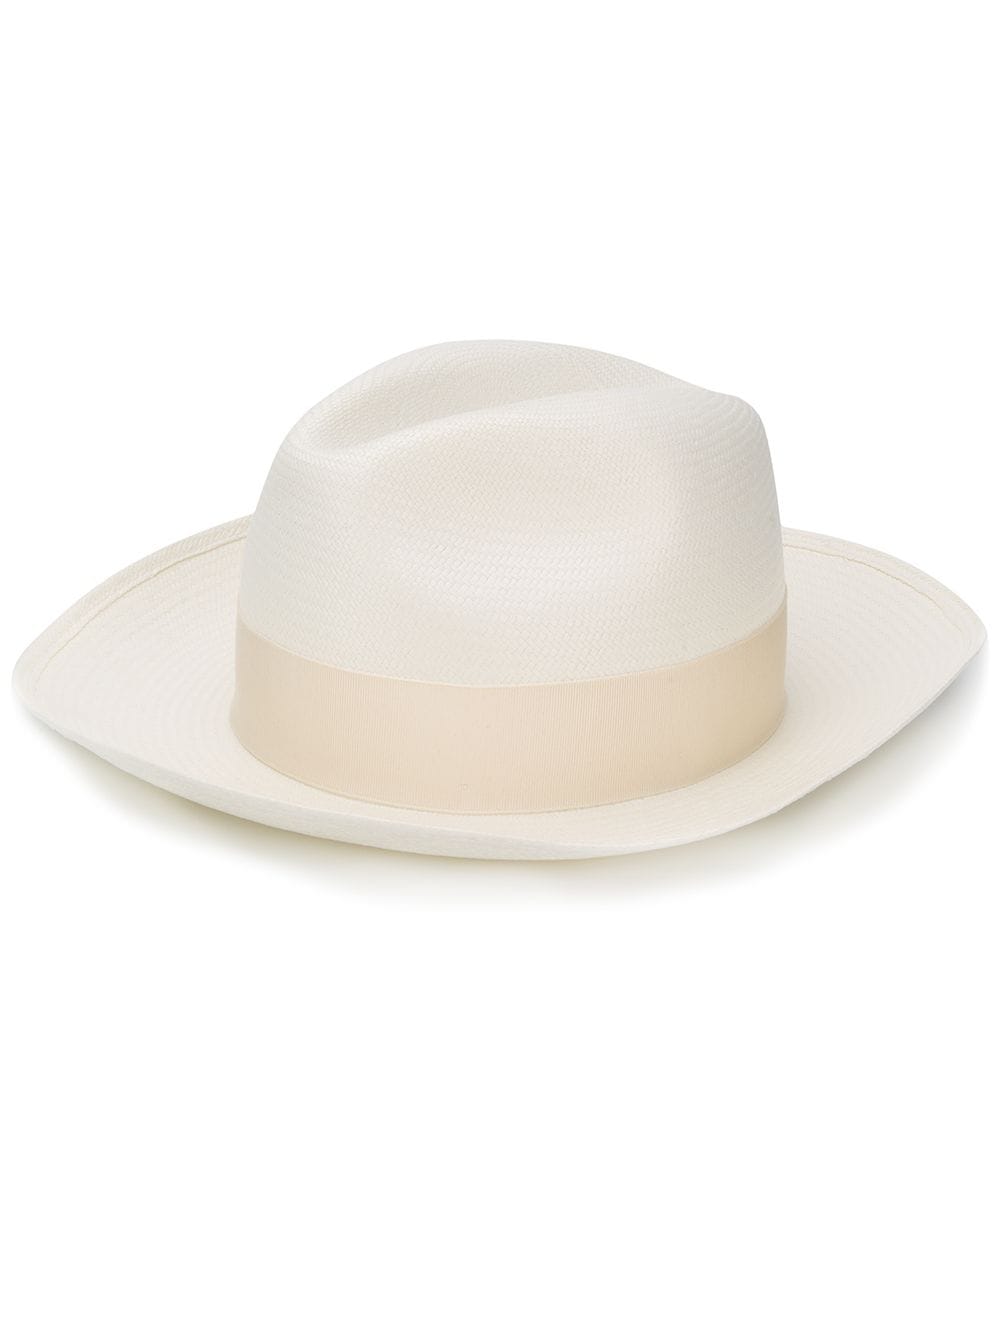 Borsalino bow ribbon hat - White von Borsalino